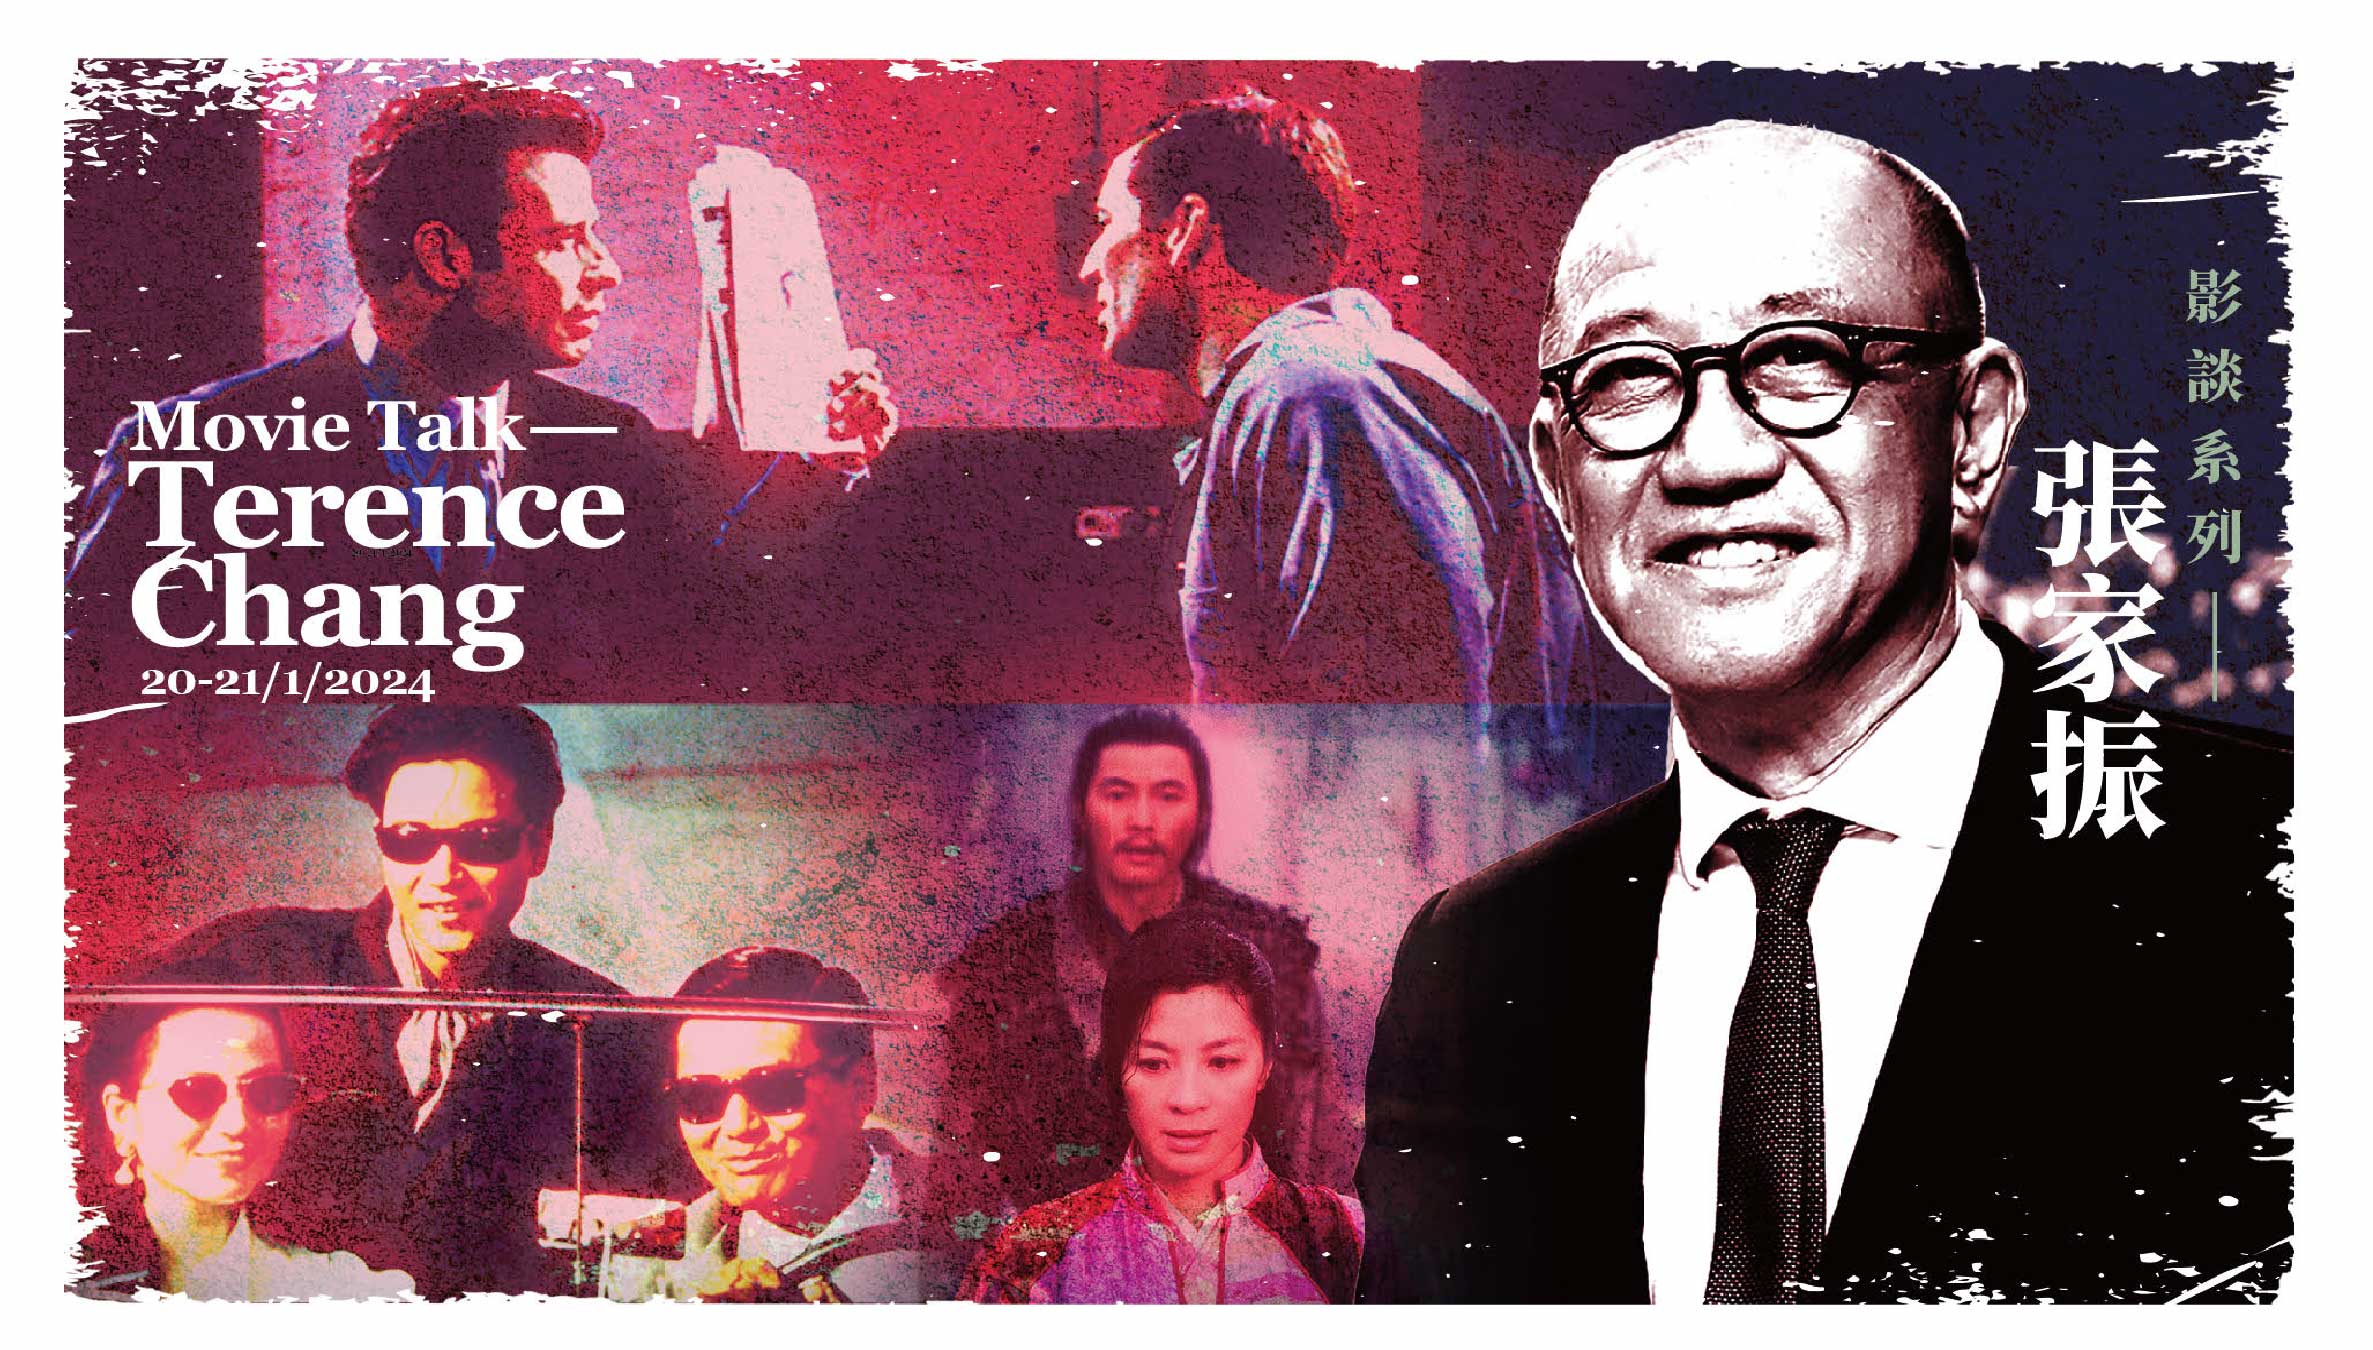 Movie Talk – Terence Chang